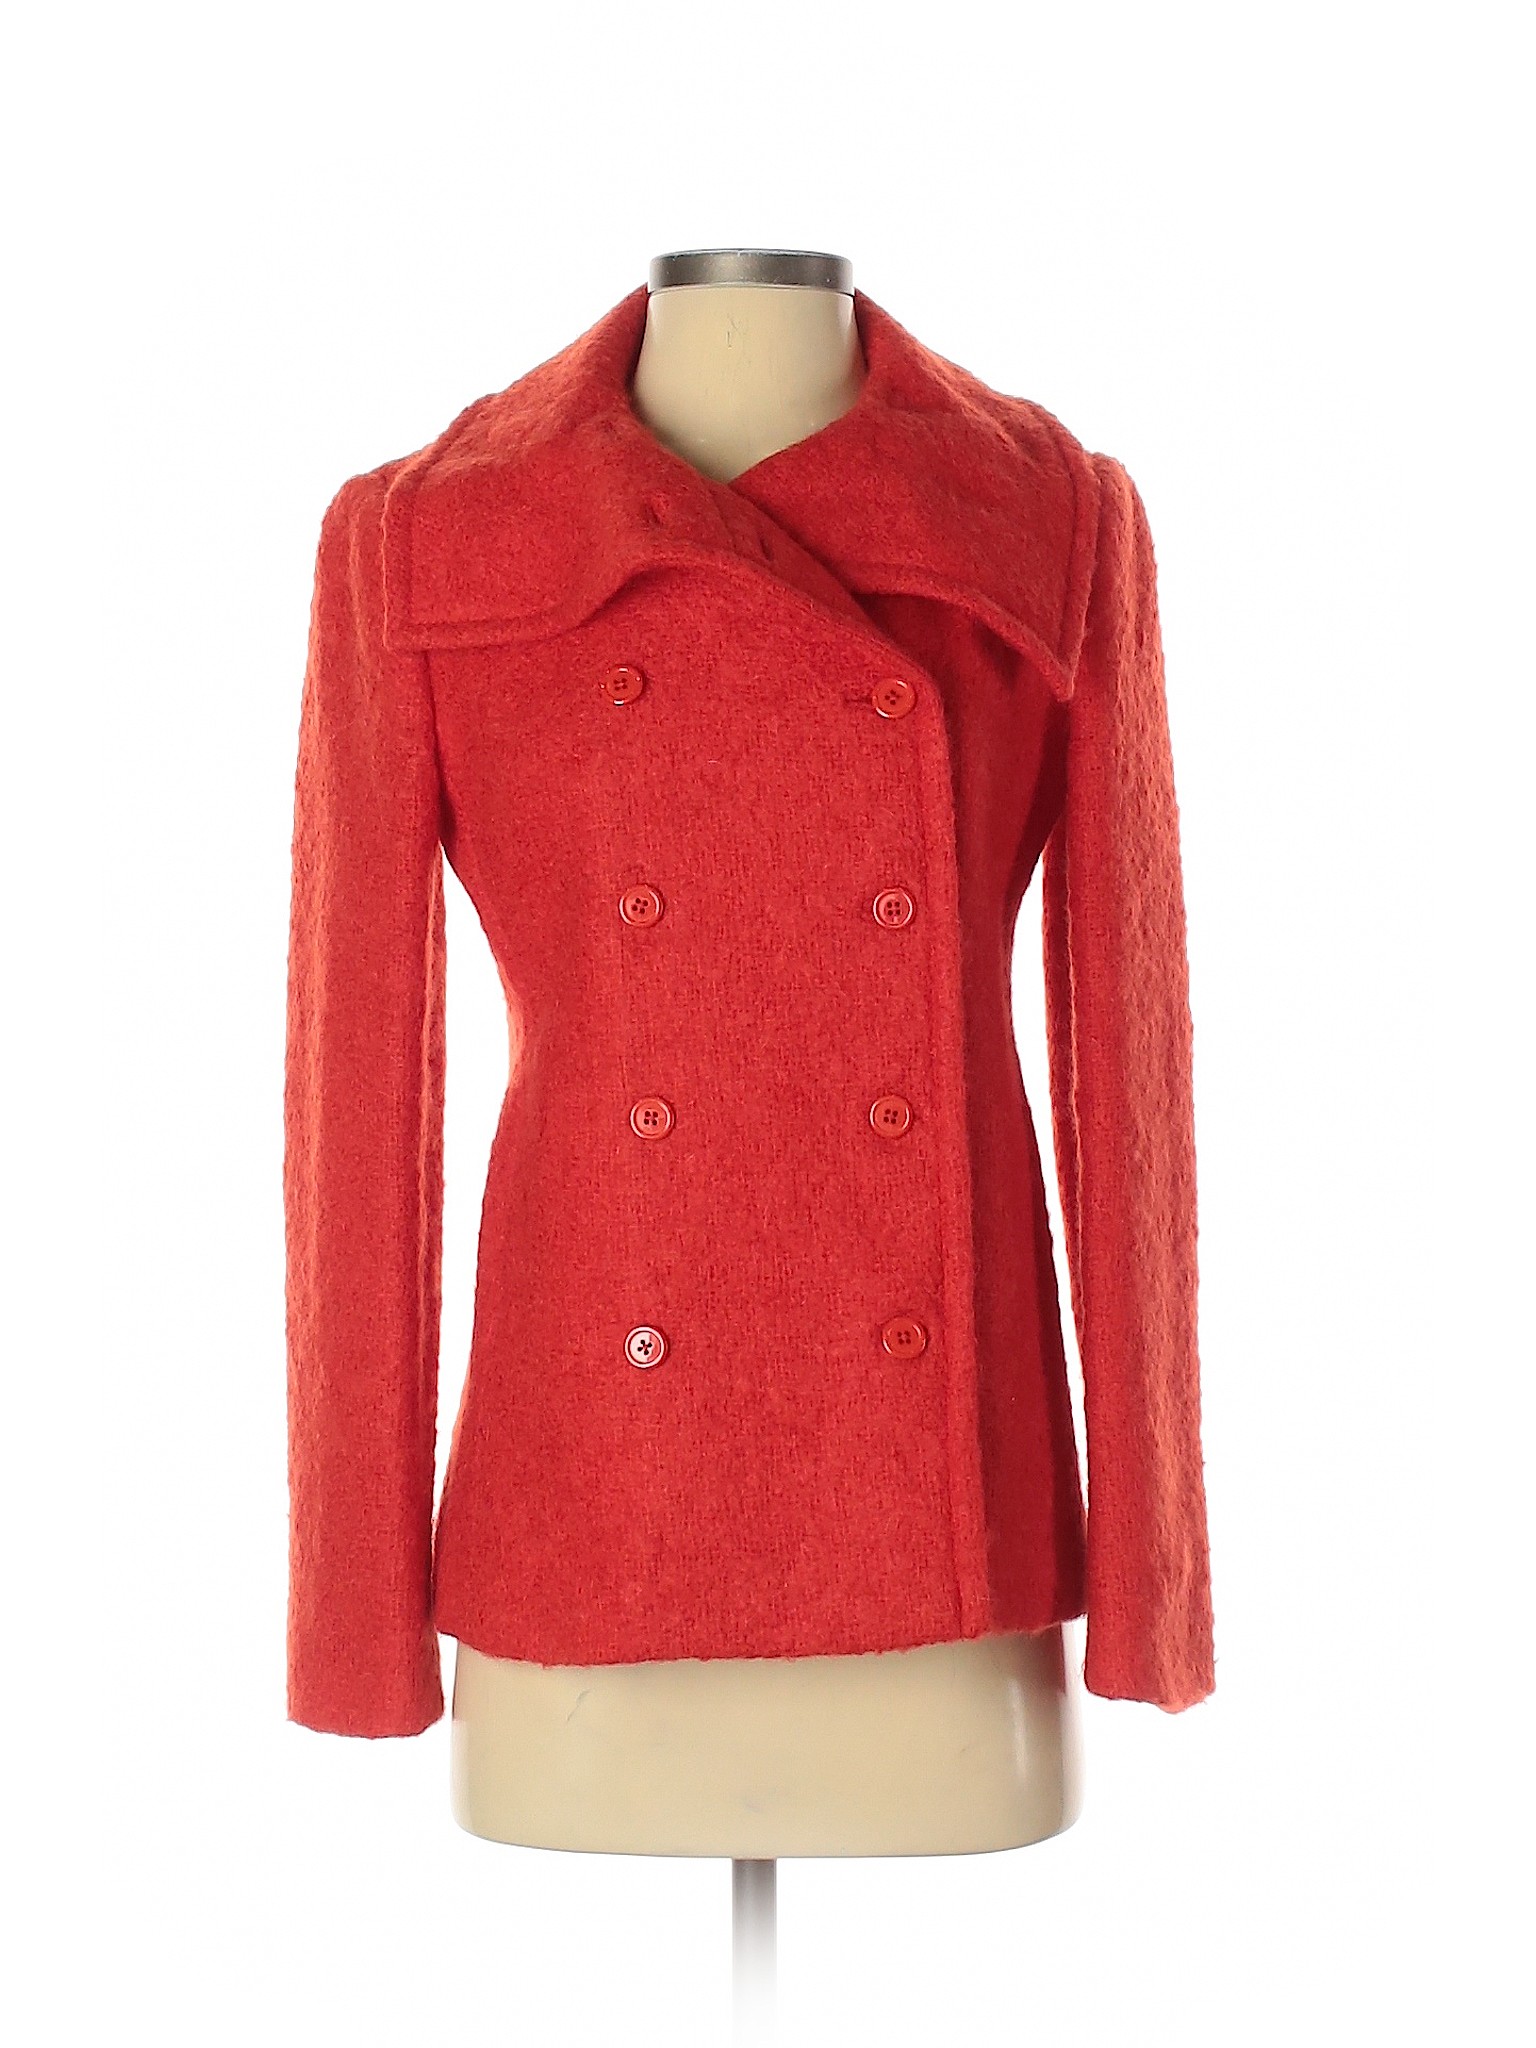 J.Crew Women Red Wool Coat 2 | eBay